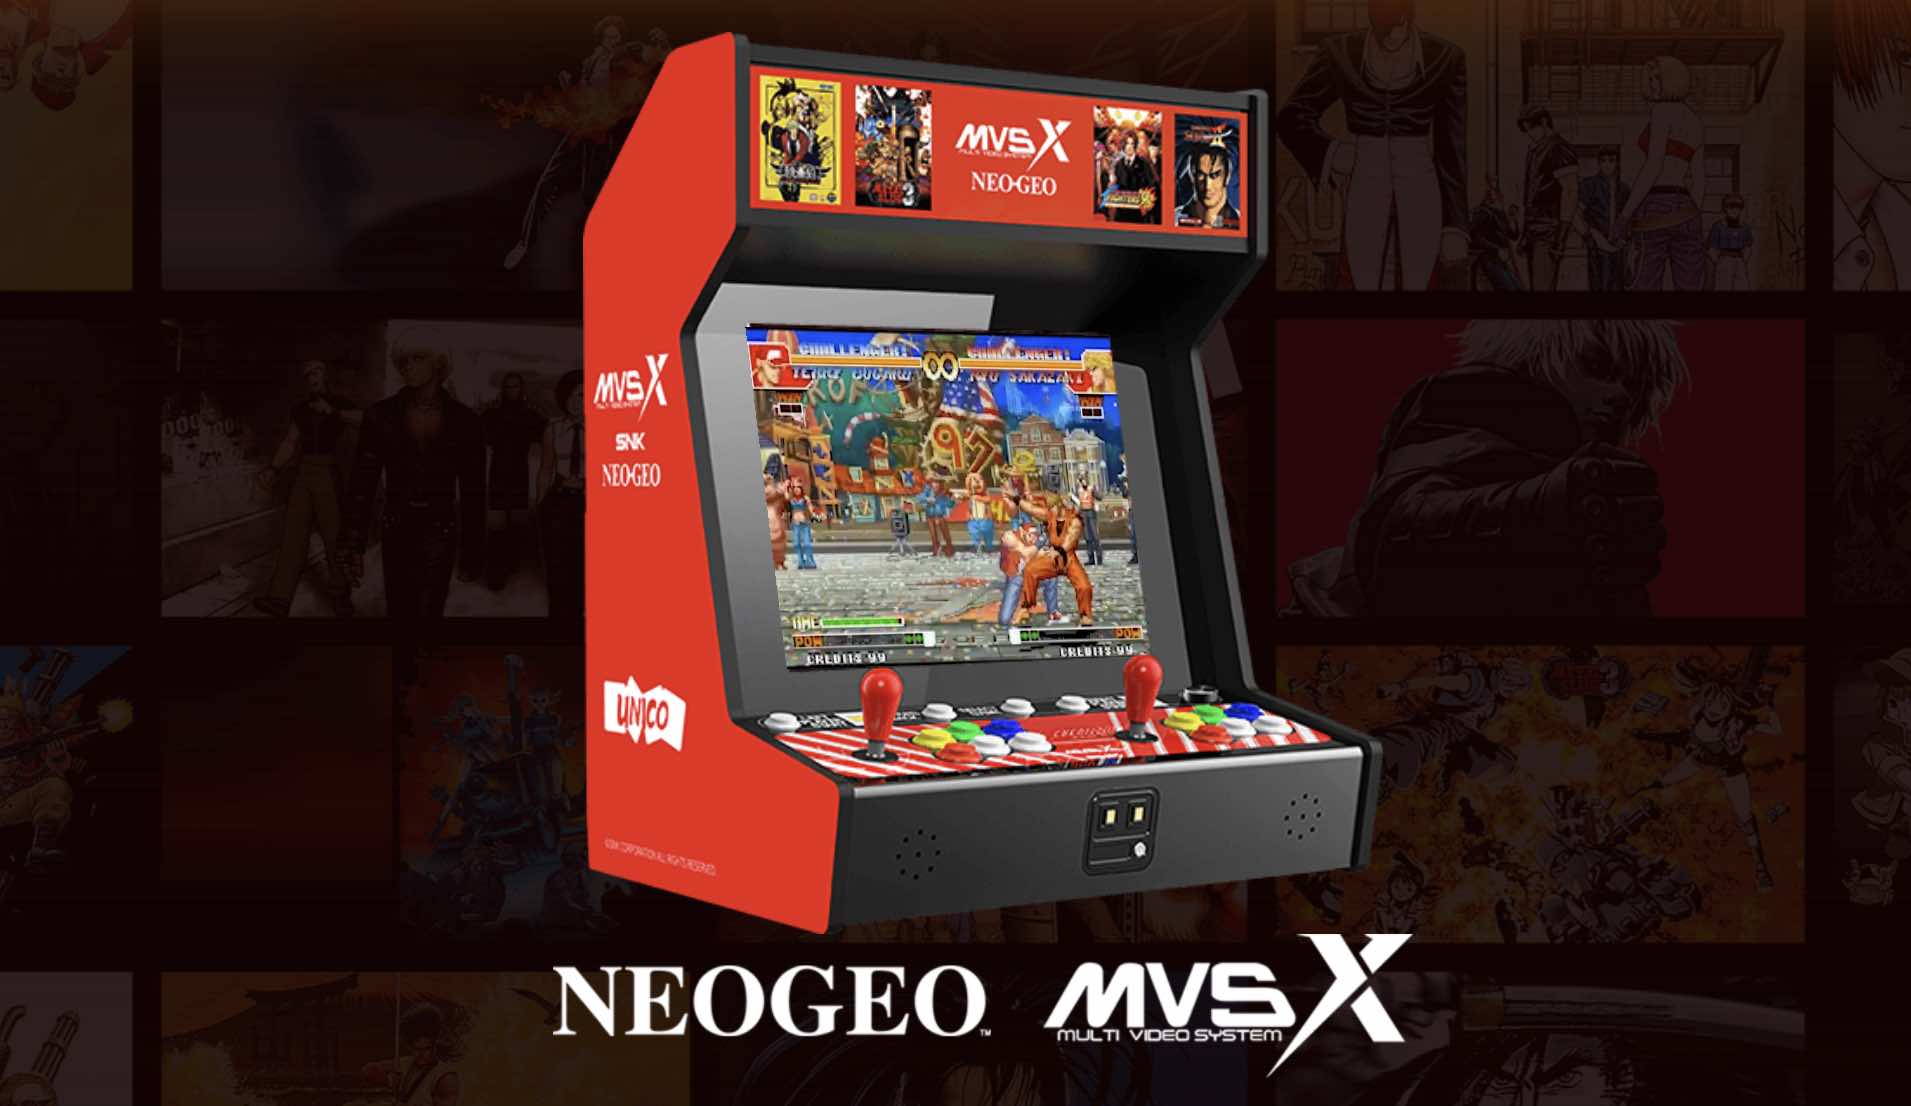 NeoGeo-MVSX